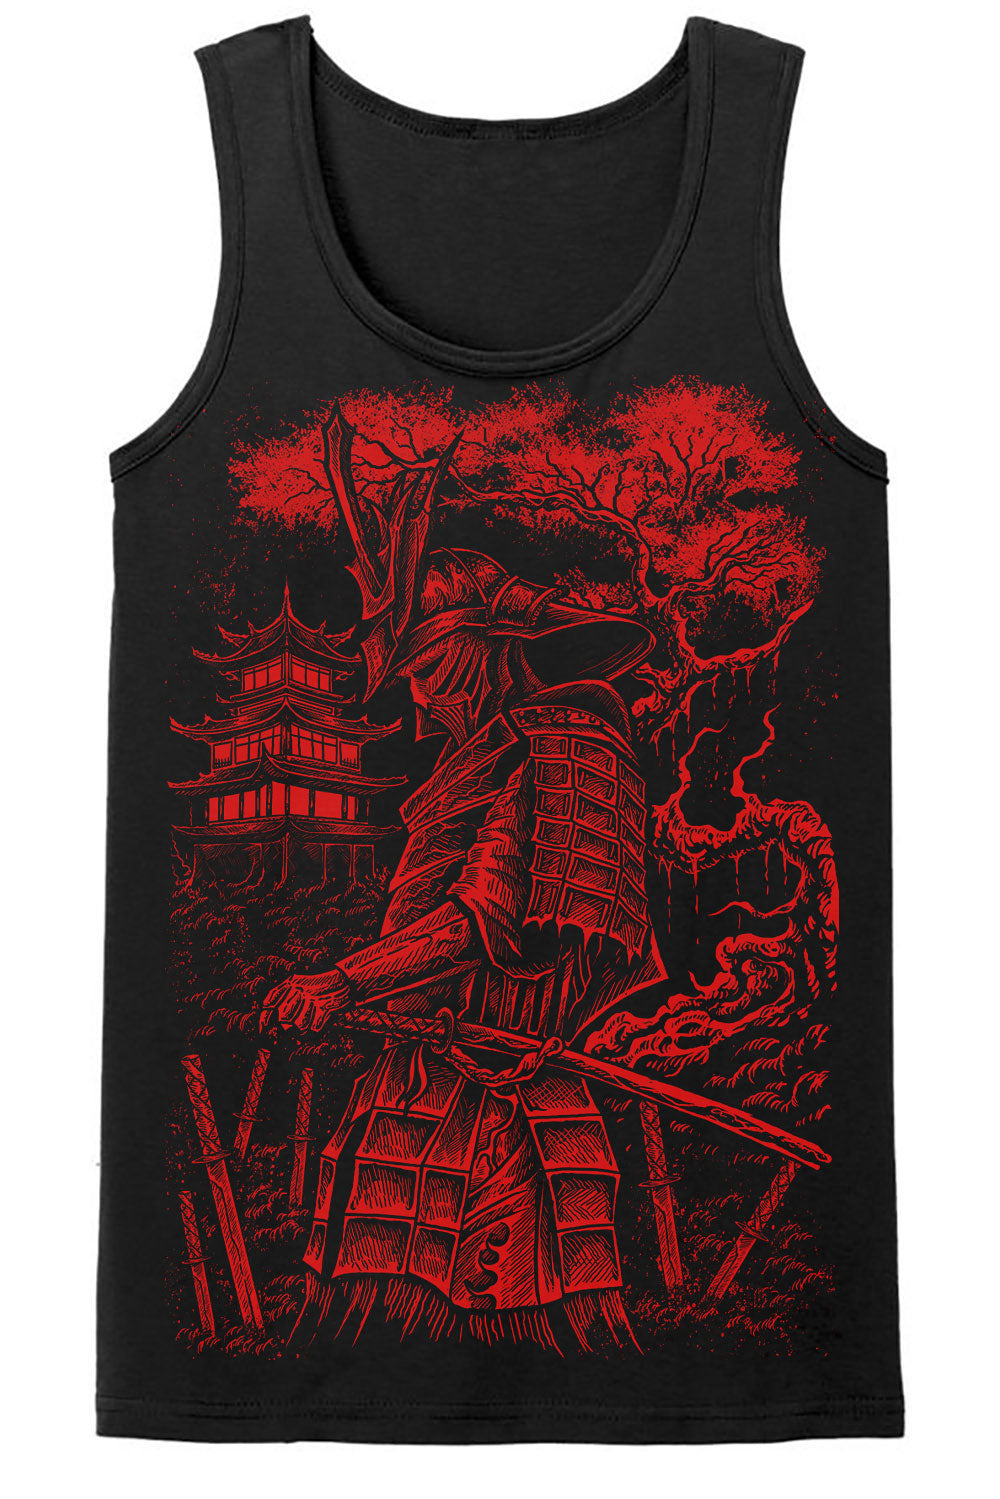 Samurai Warrior T-shirt [BLOOD RED]